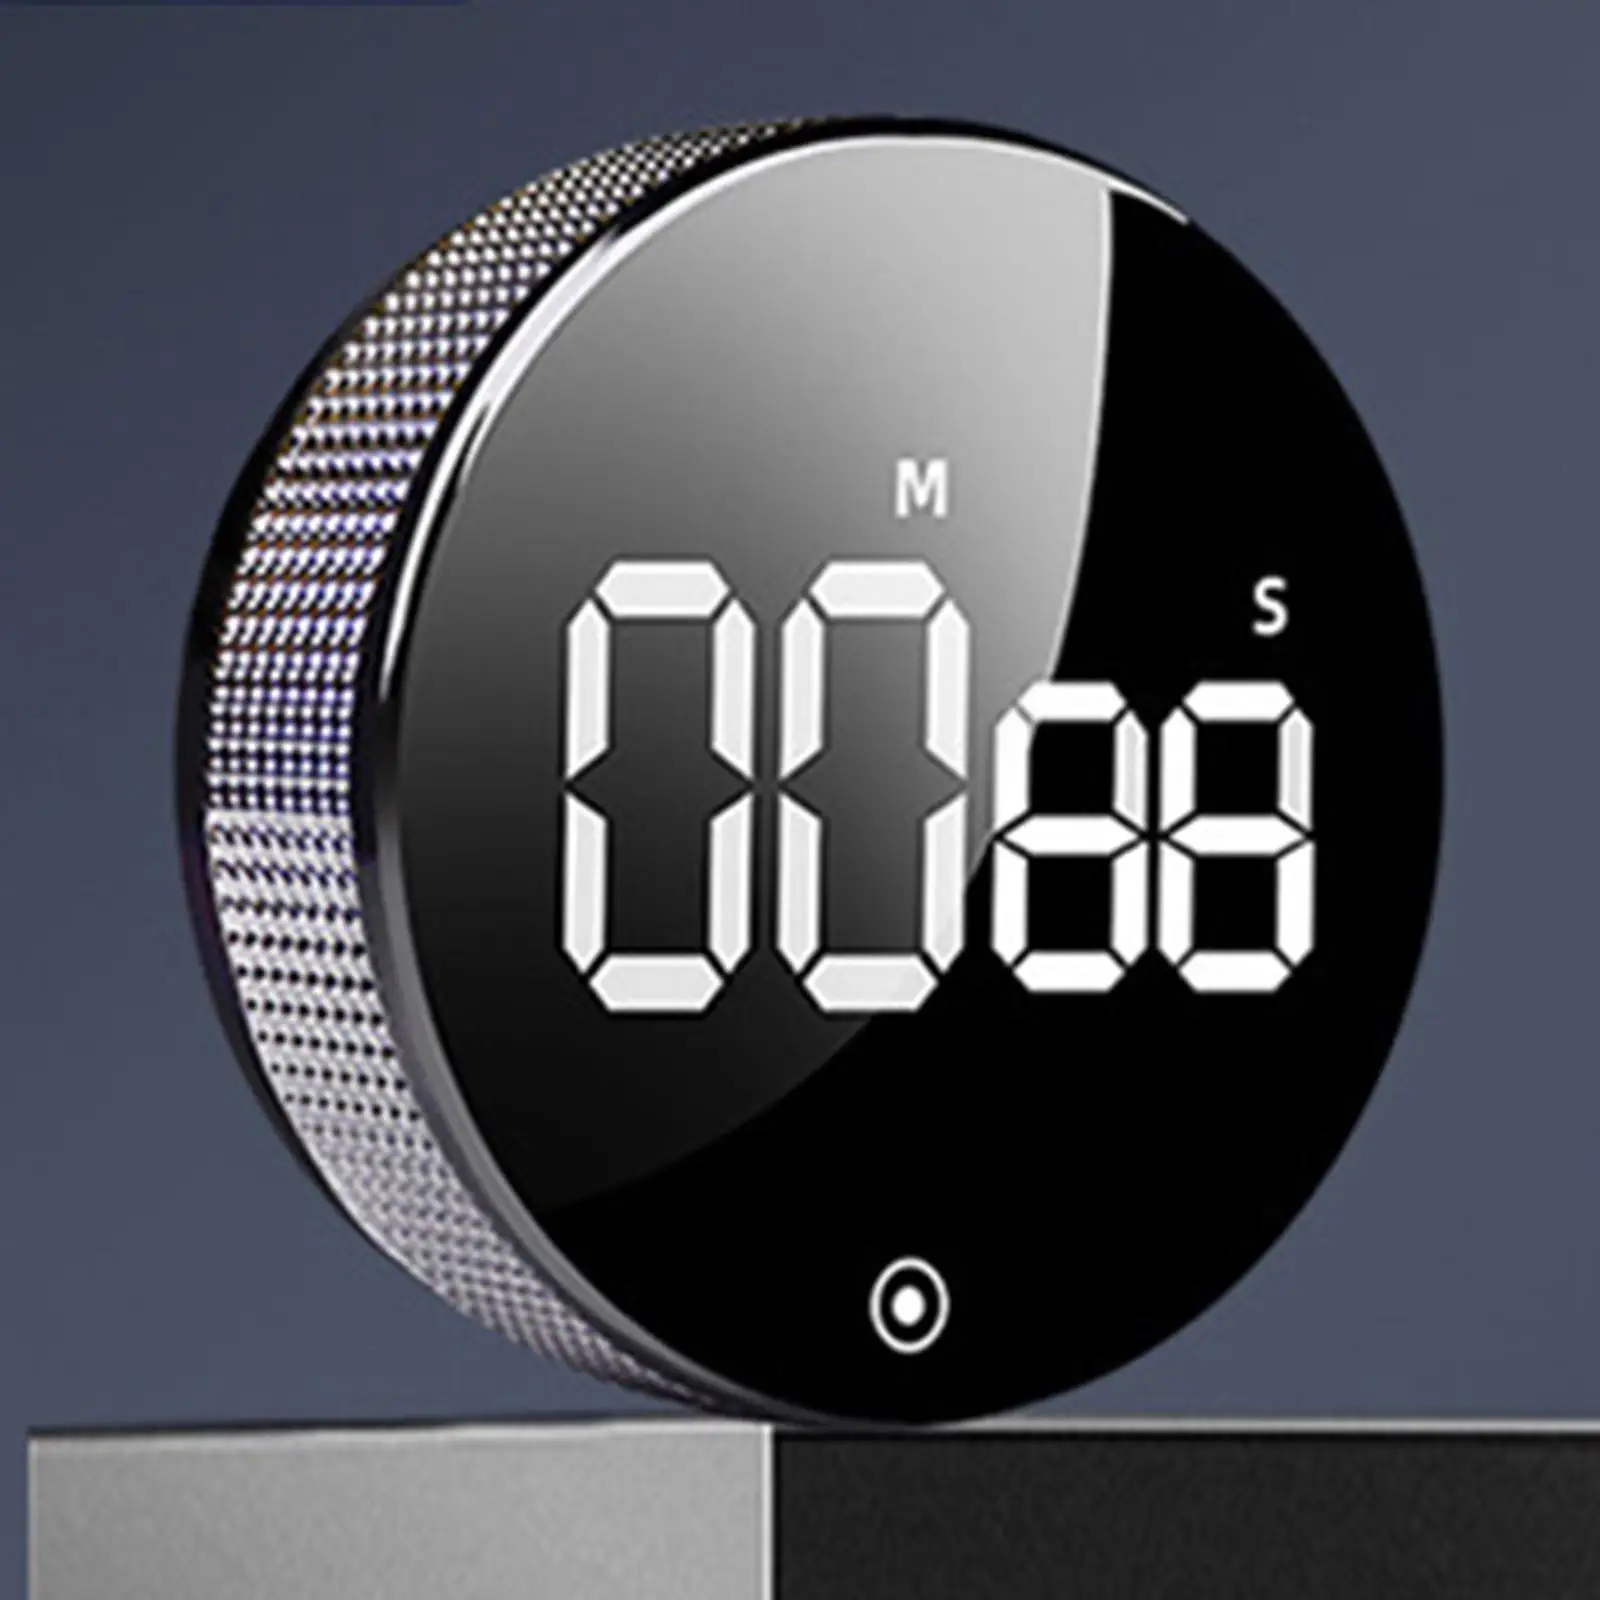 Round Digital Kitchen Timer Magnetic Attraction Volume Adjustable LED Display Silent Desktop Table Clock for Cooking